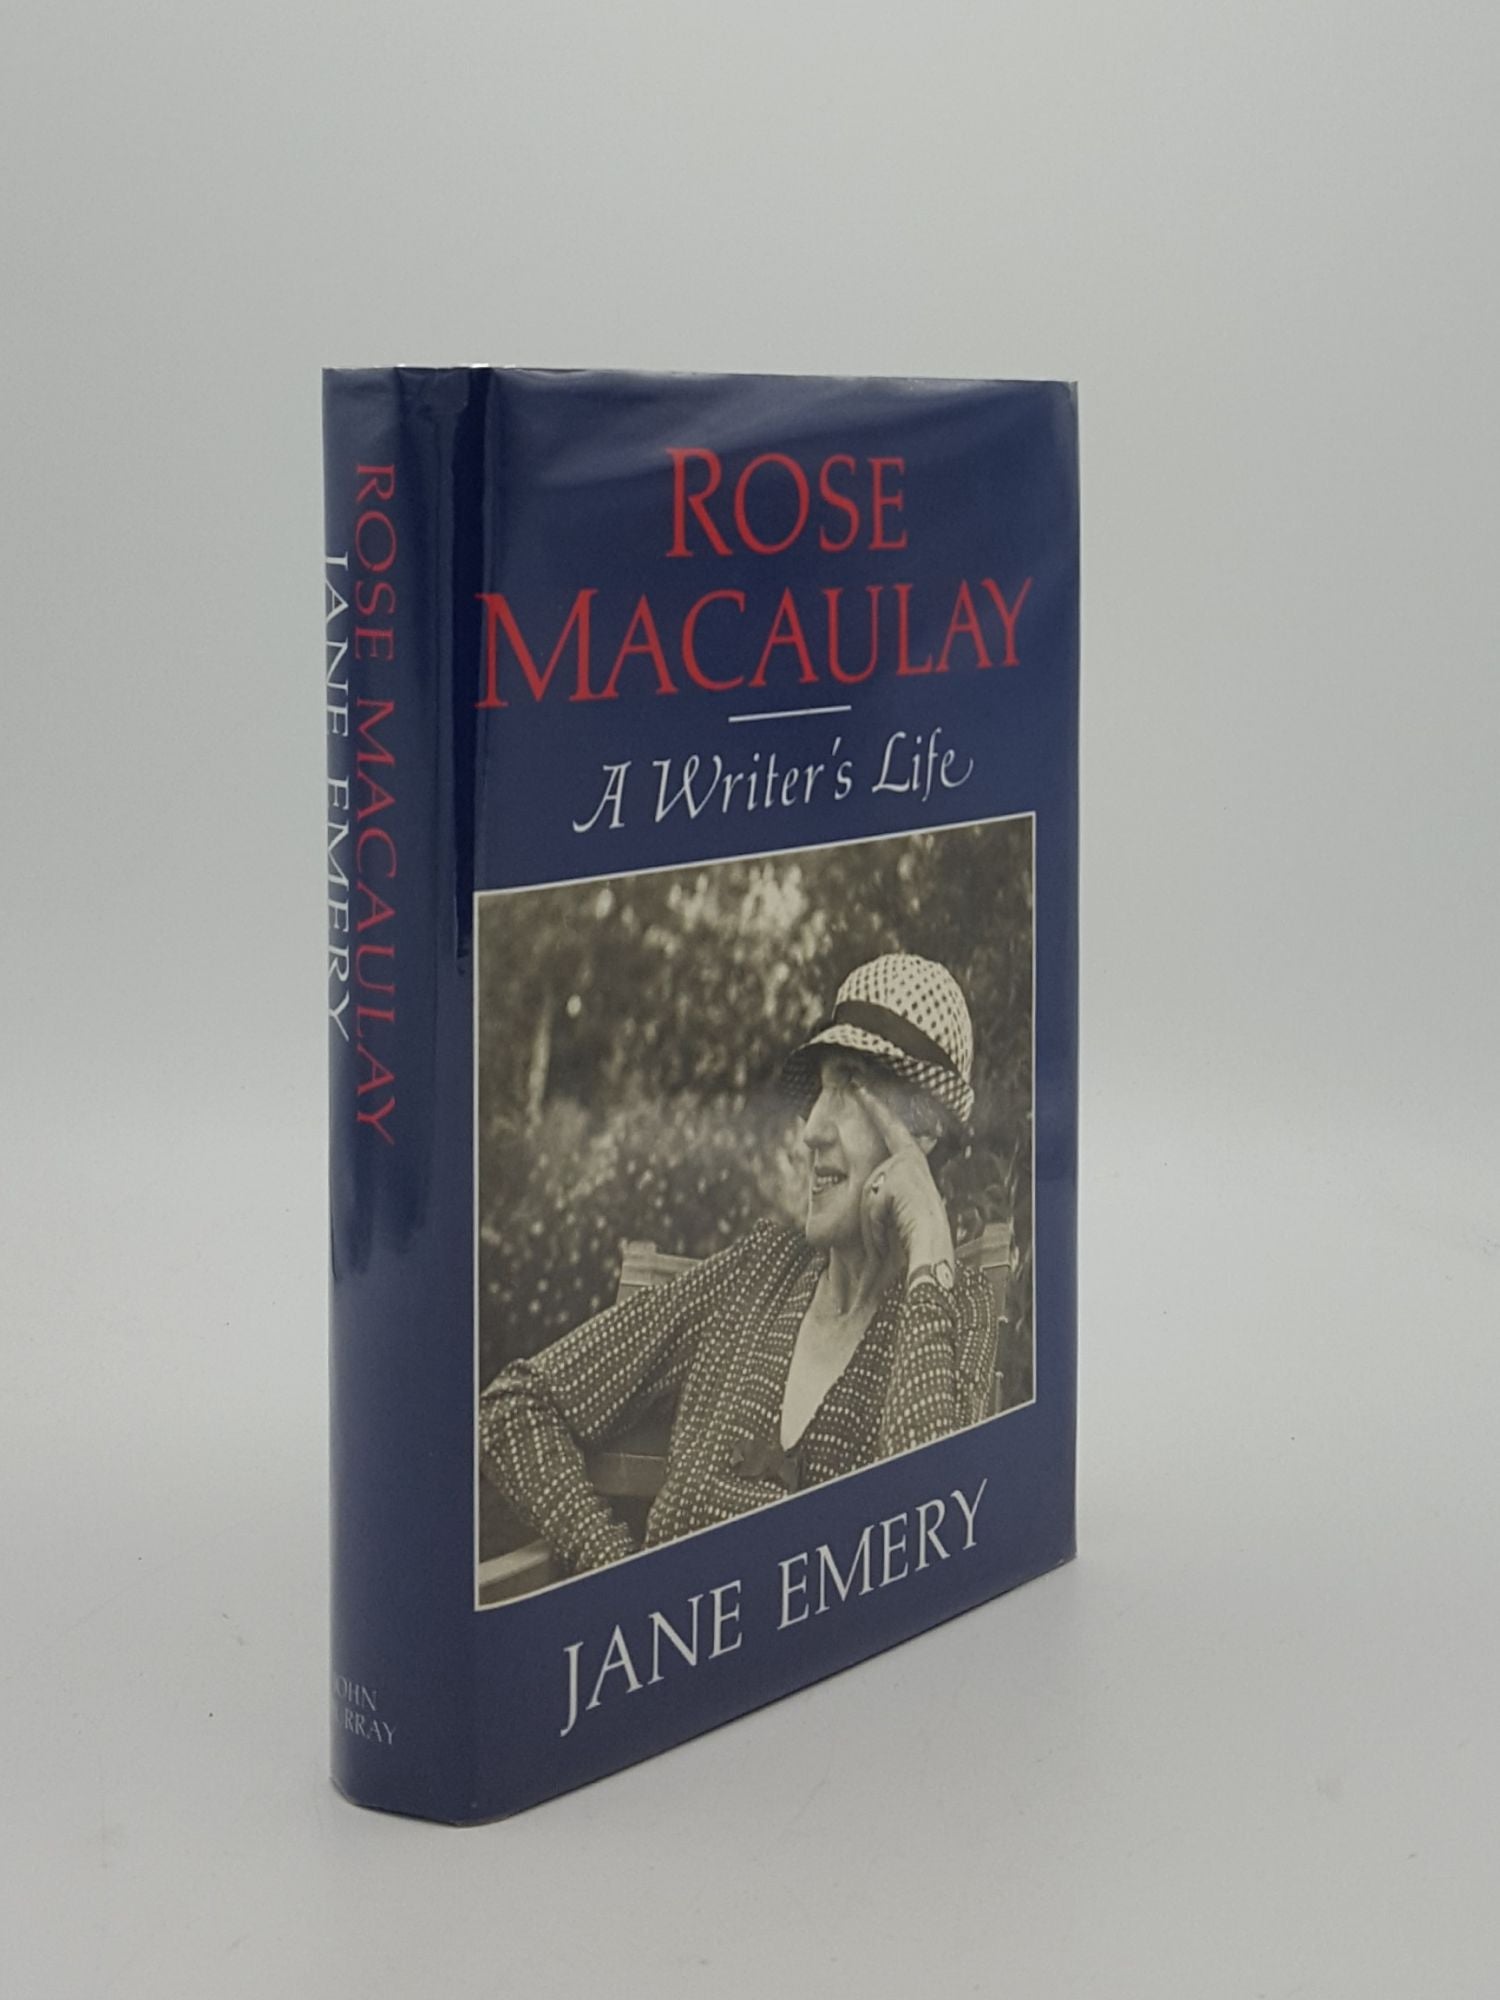 EMERY Jane - Rose Macaulay a Writer's Life